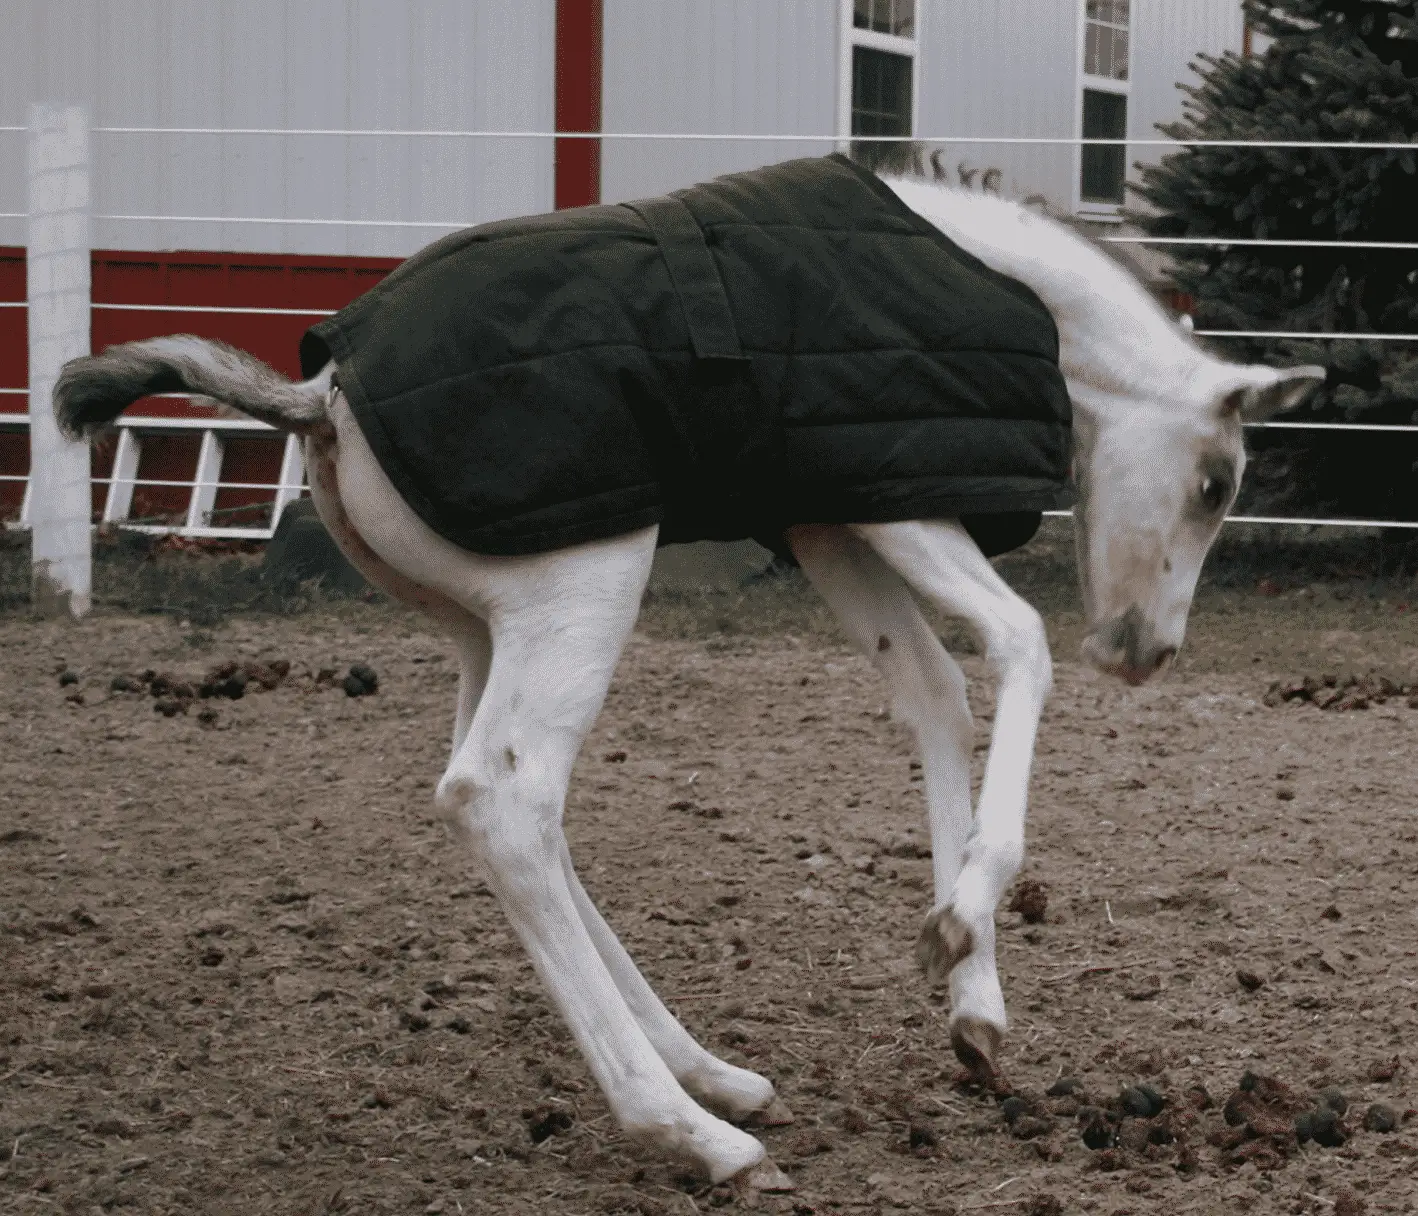 Horse blanket on a foal